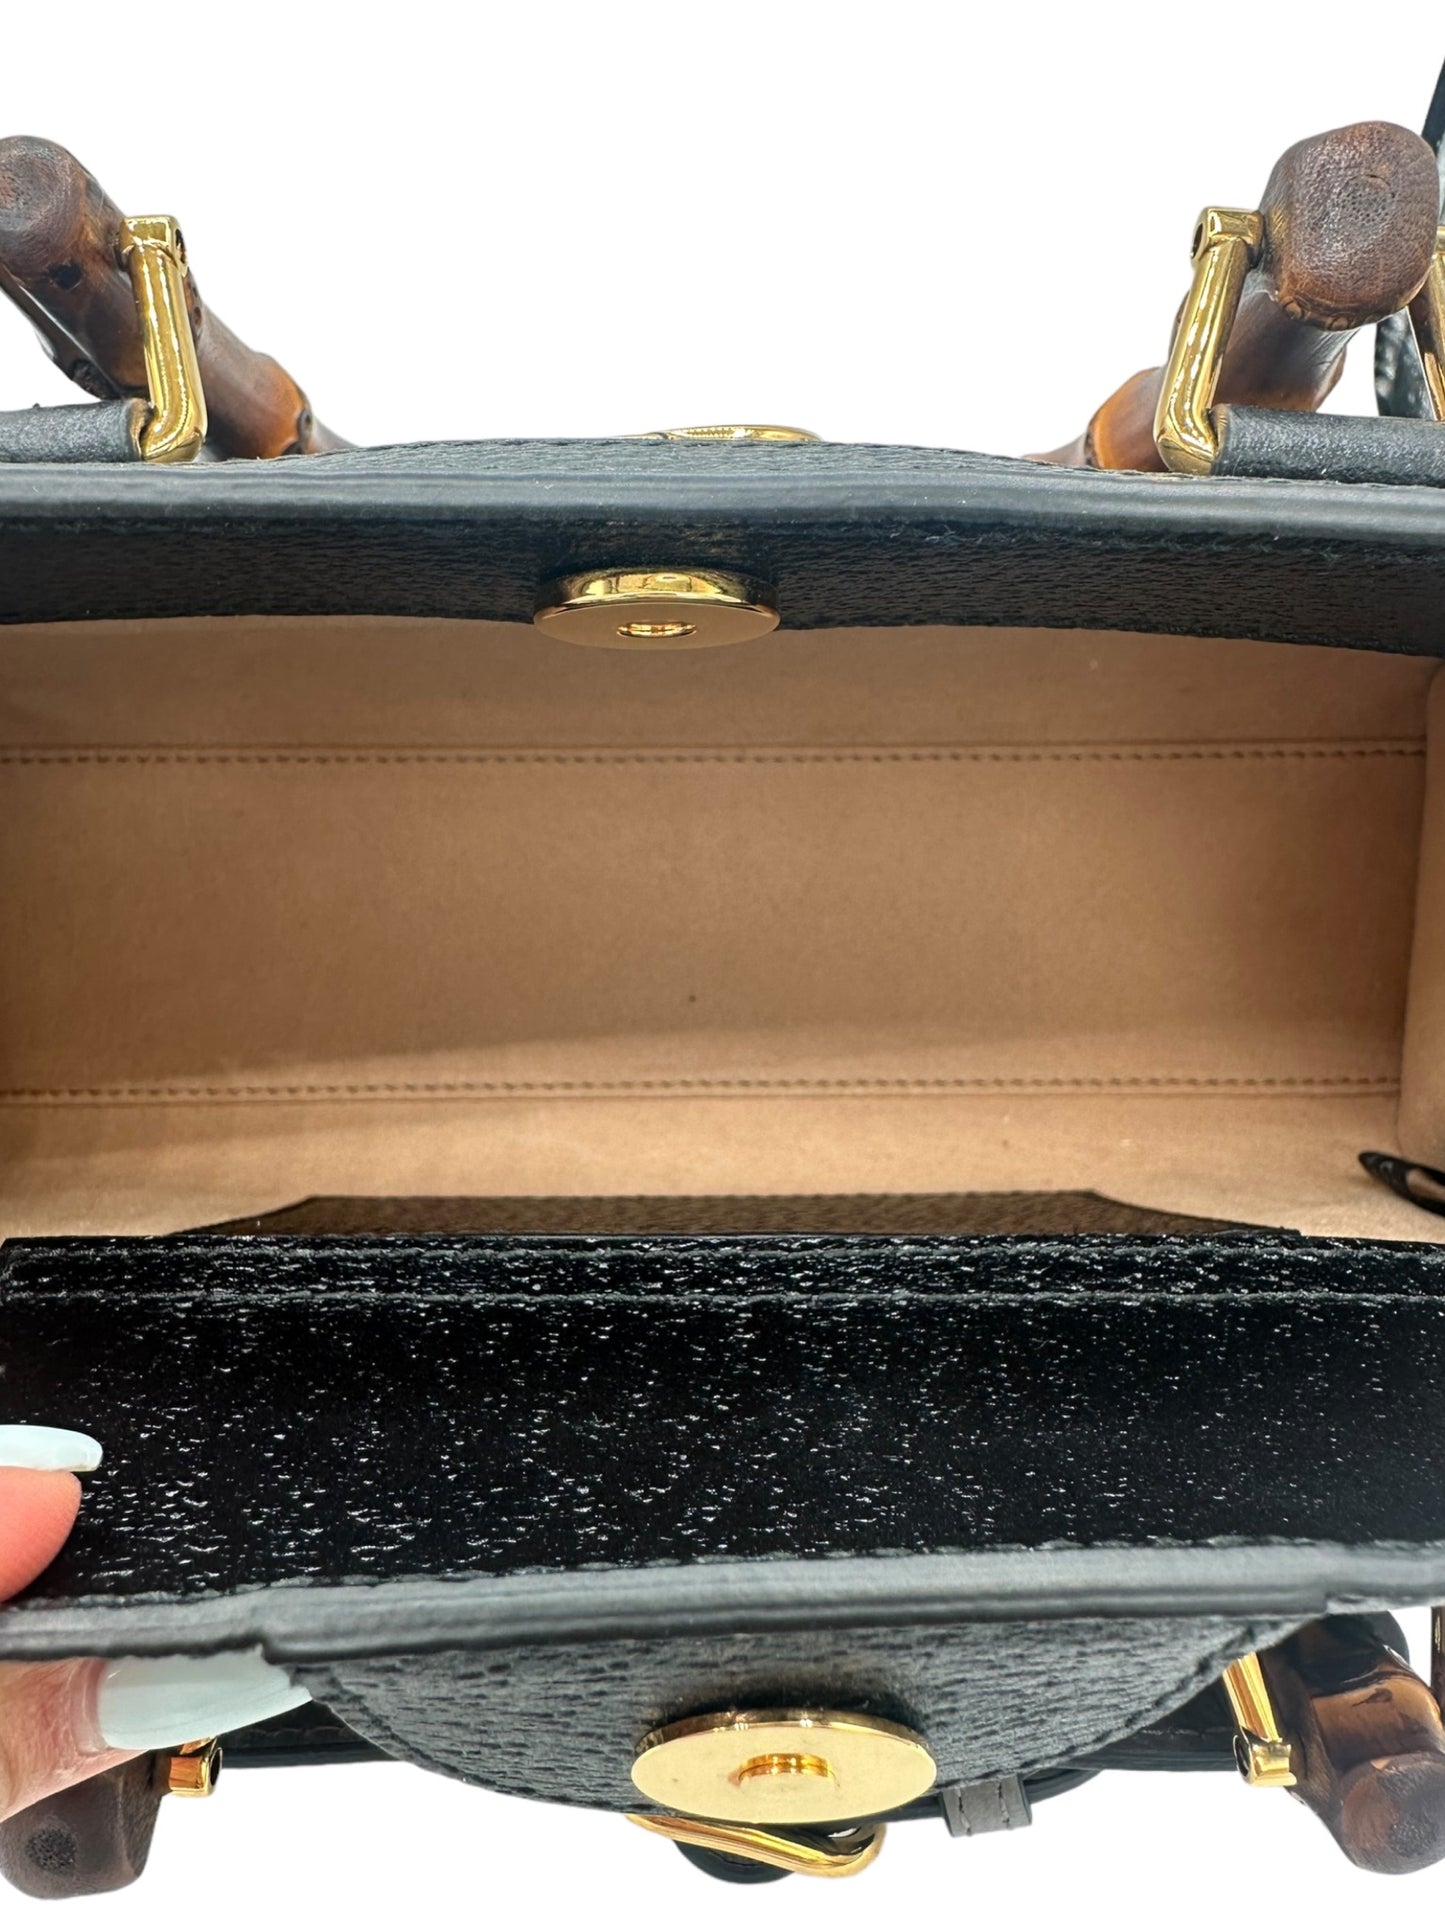 GUCCI - Black Leather Small Diana Shoulder Bag